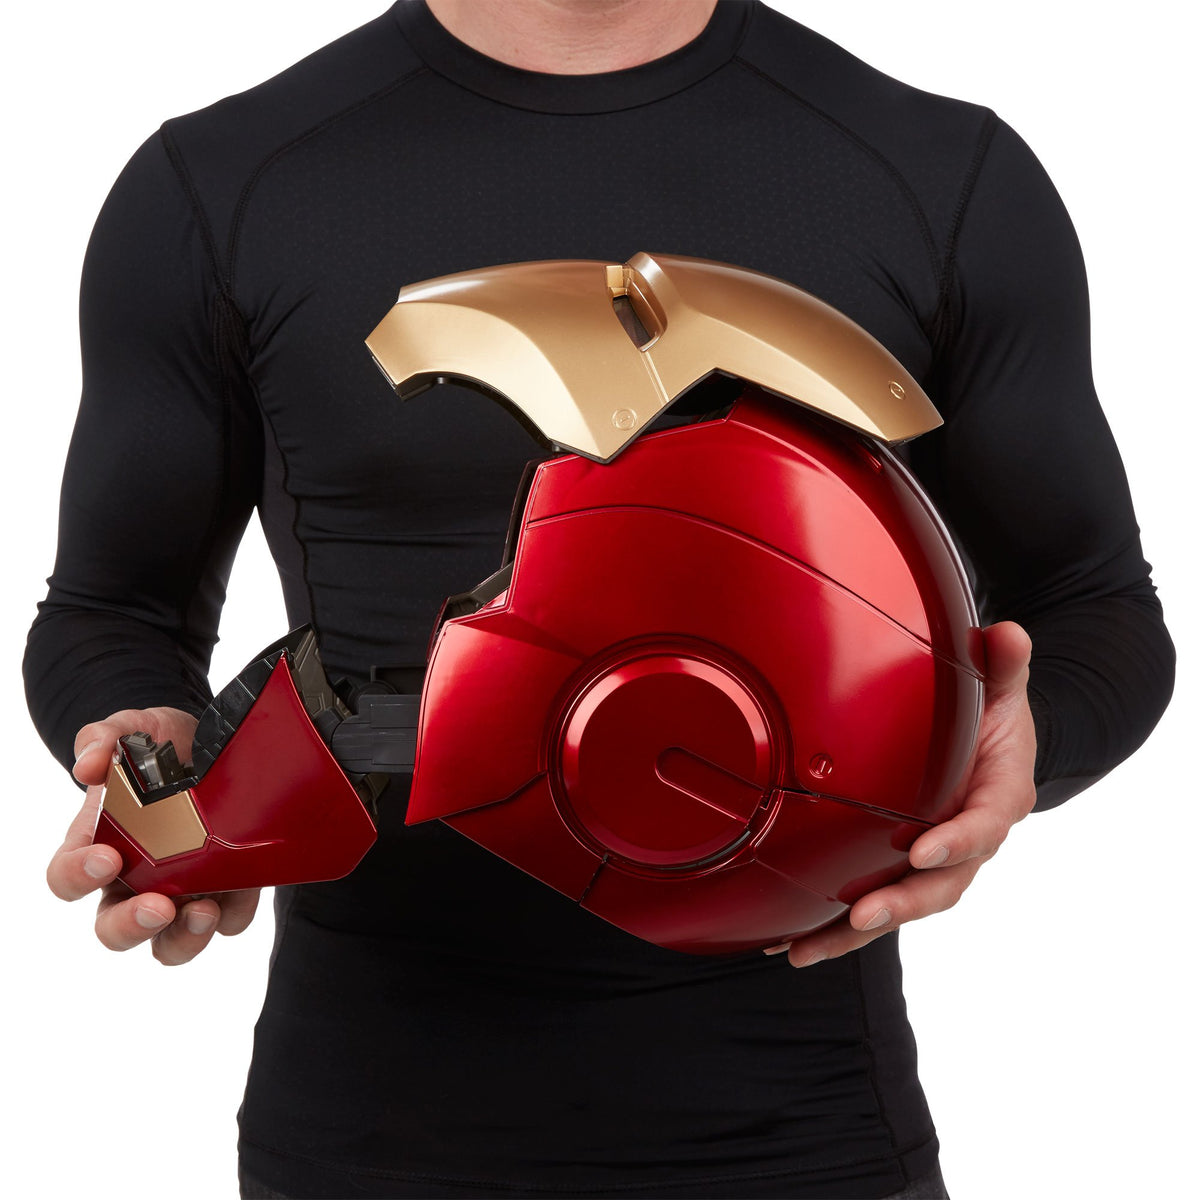 IRON MAN Marvel Legends Electronic Helmet Replica Review